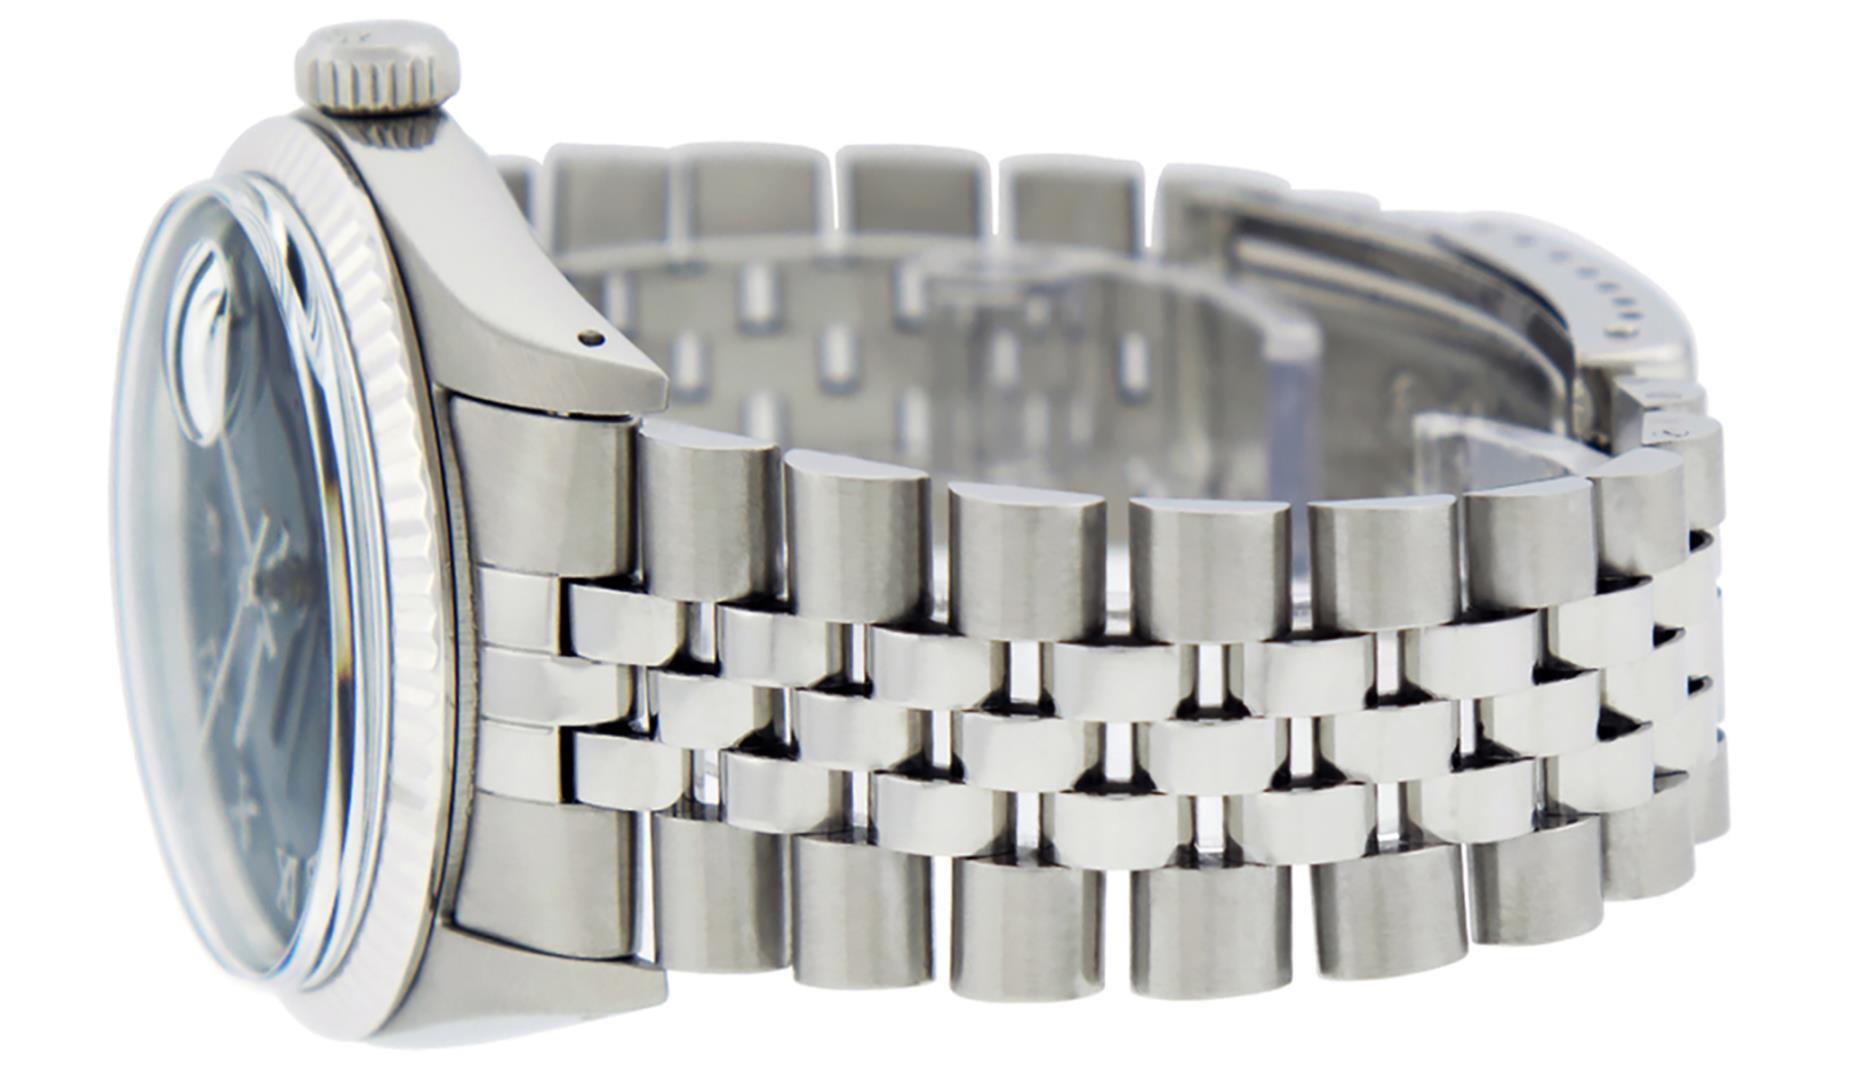 Rolex Mens Stainless Steel Black Roman Datejust Wristwatch